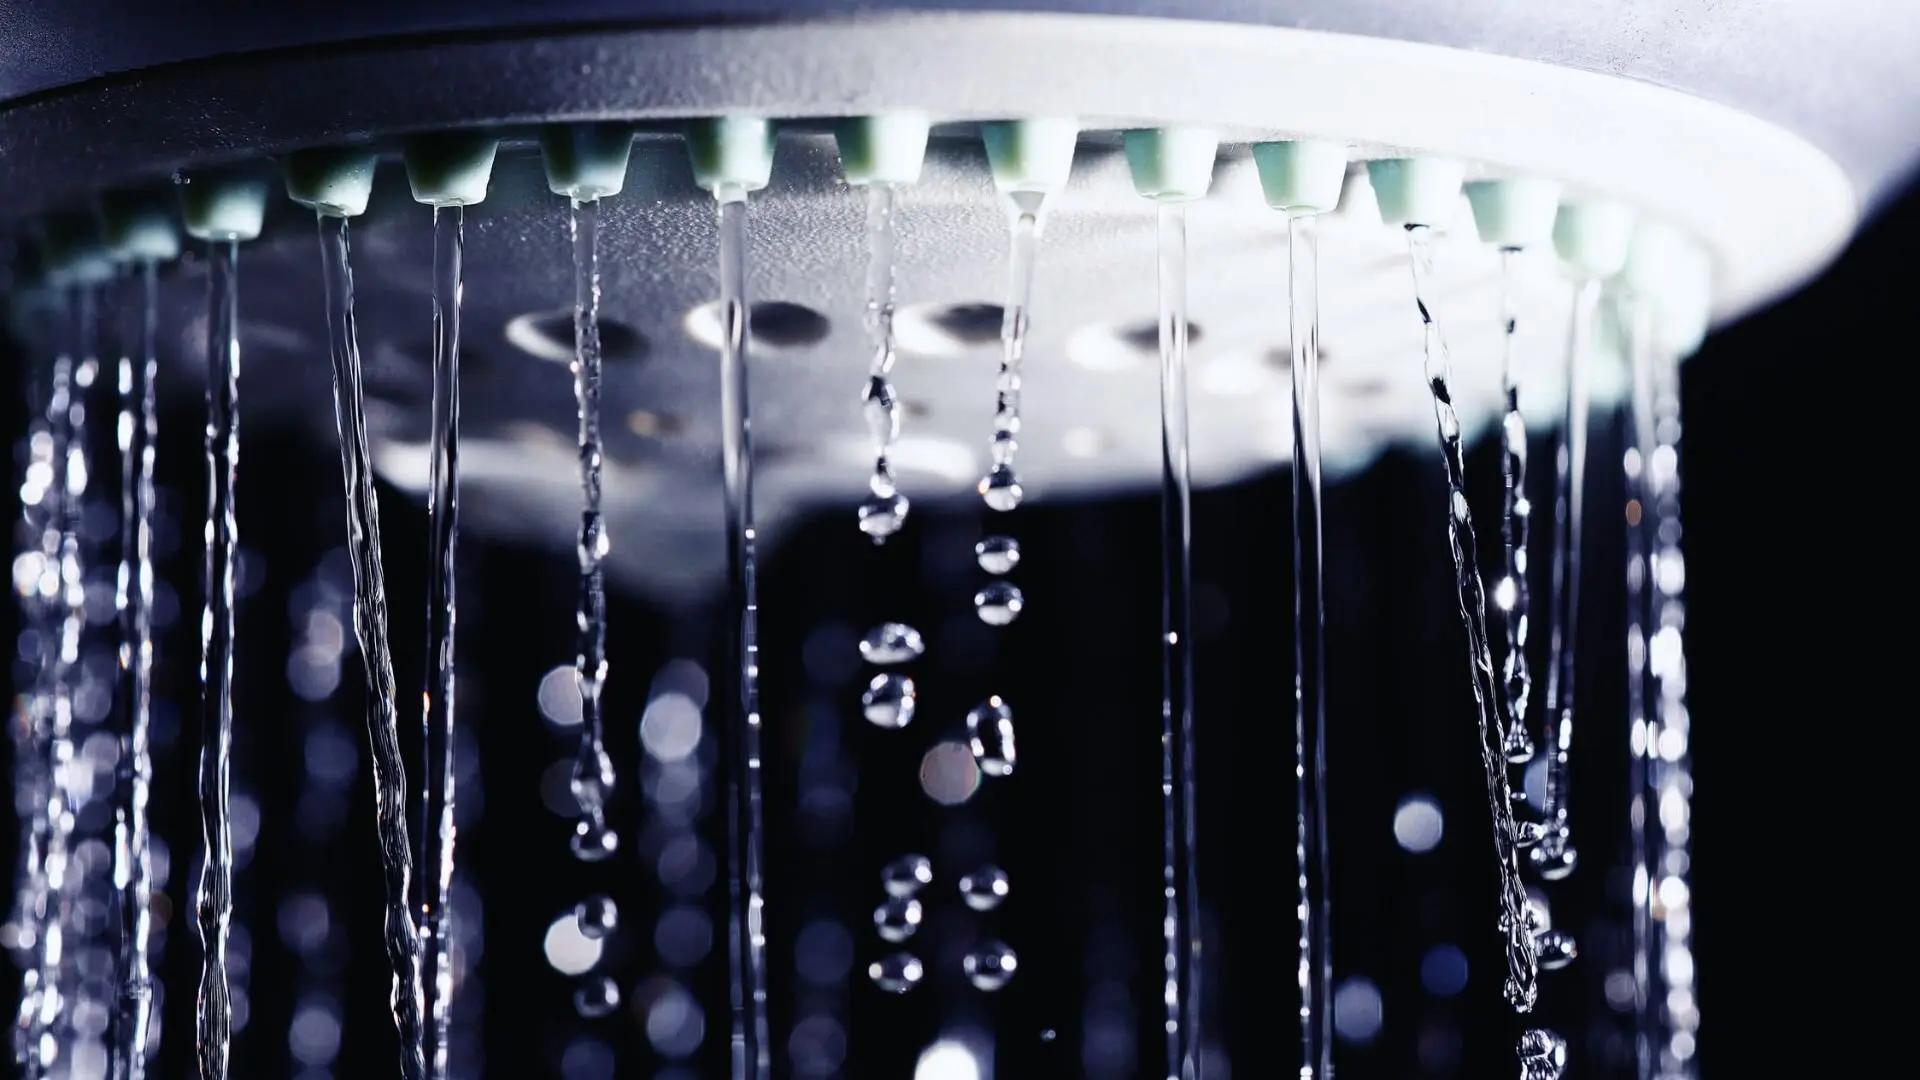 How to Fix Slow Shower Drain - GoodBee Plumbing